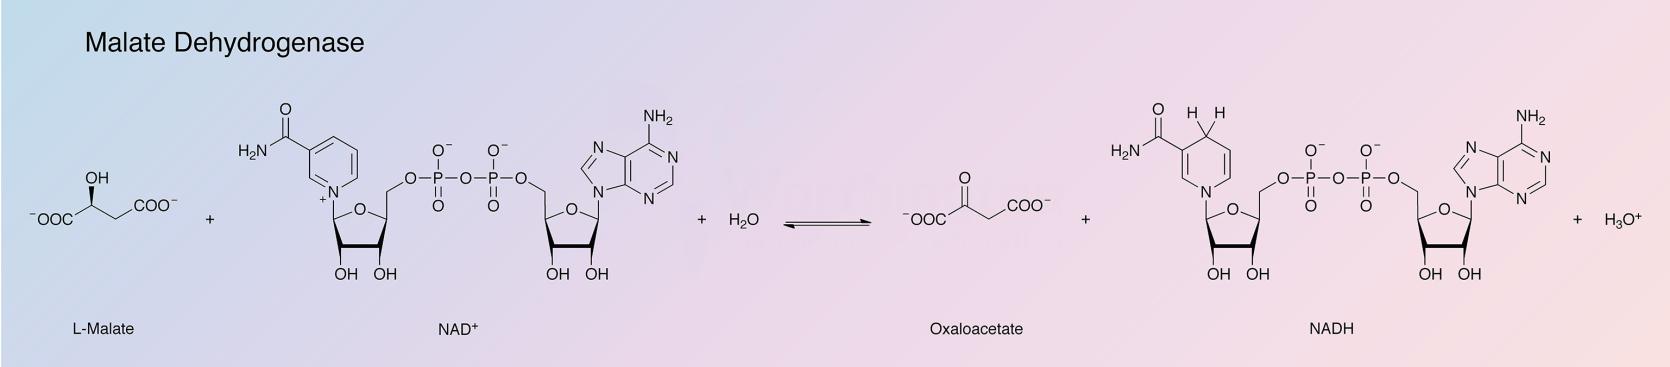 Malate Dehydrogenase Enzymatic Reaction